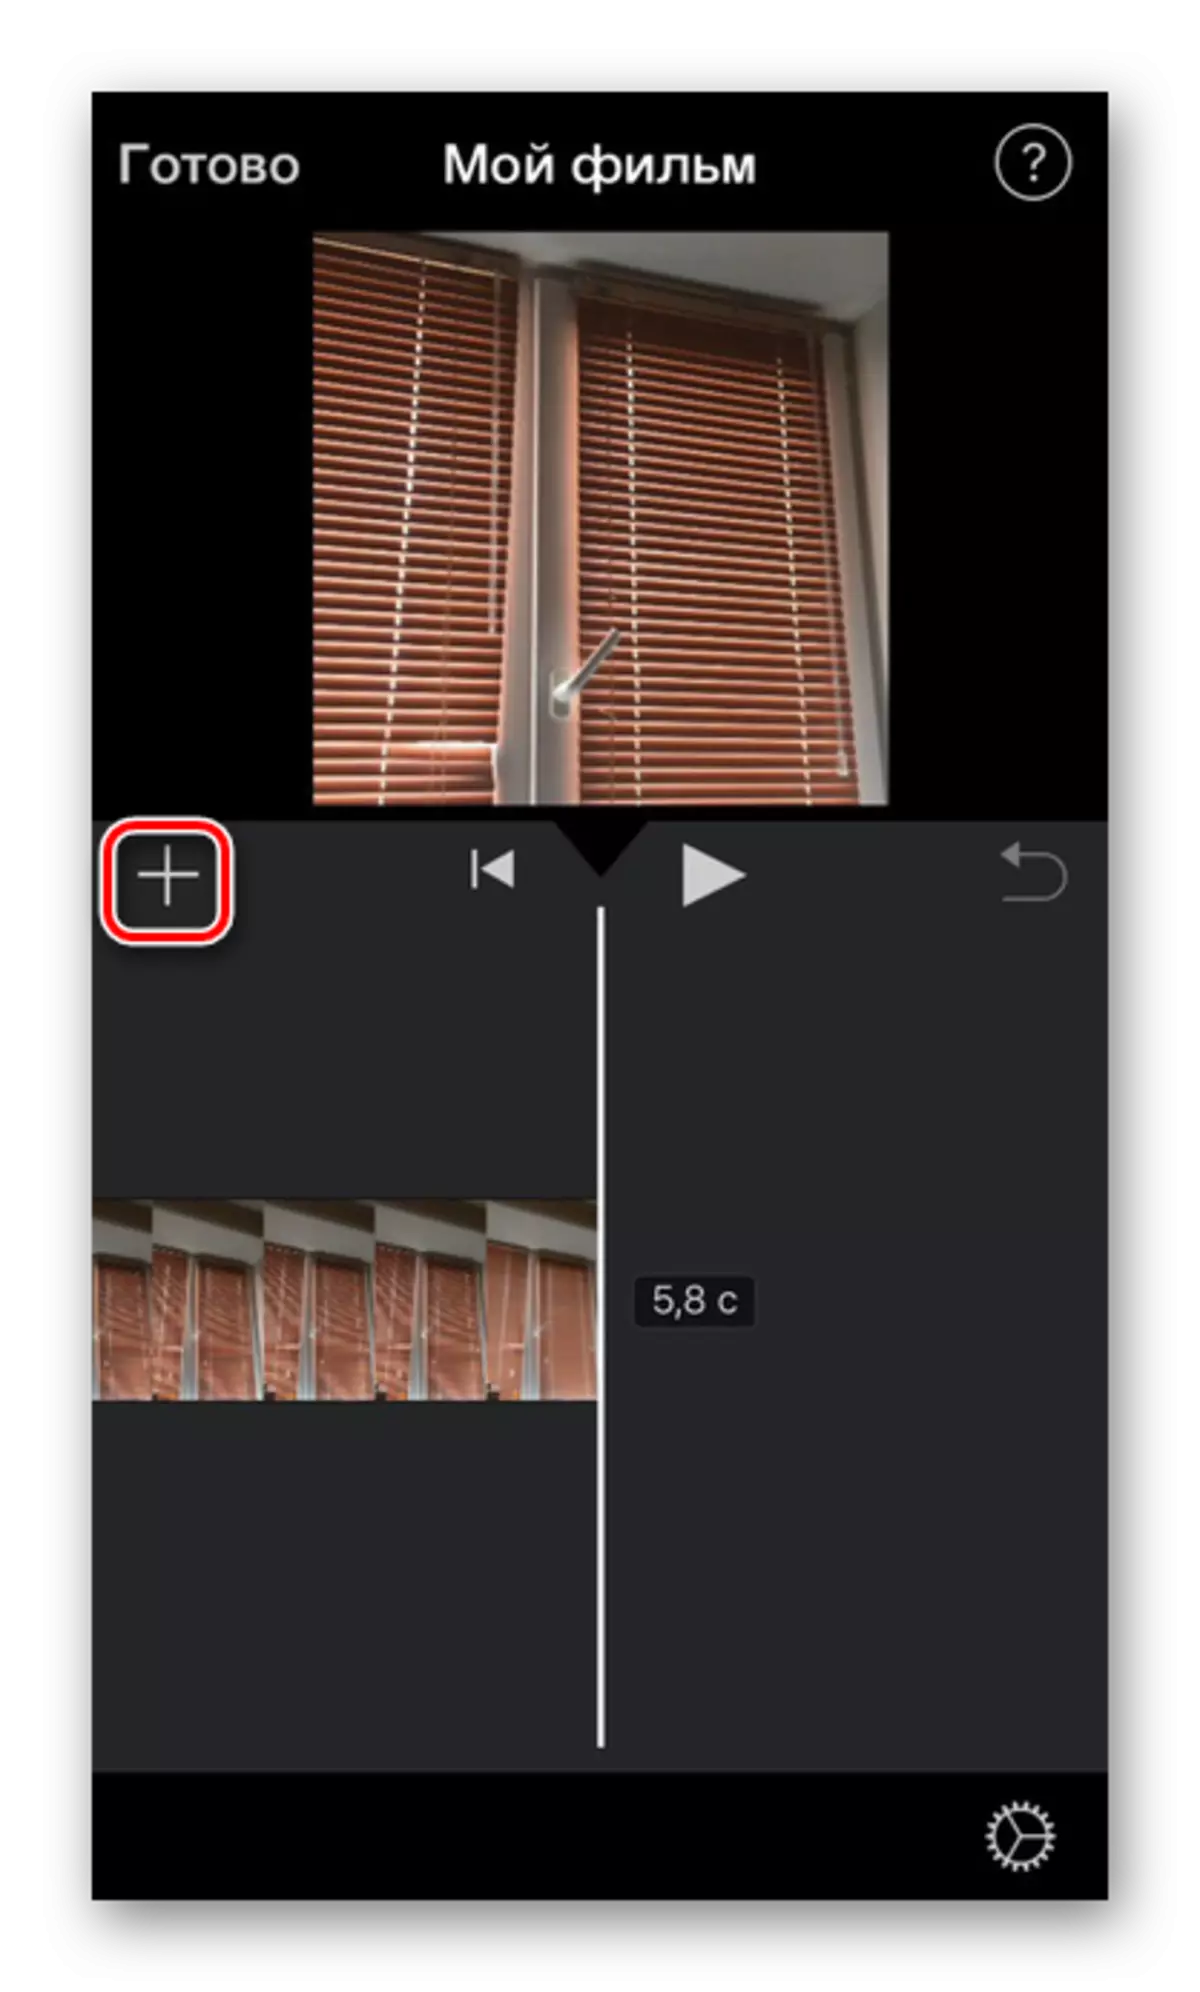 Proses menambah audio pada video dalam aplikasi iMovie pada iPhone